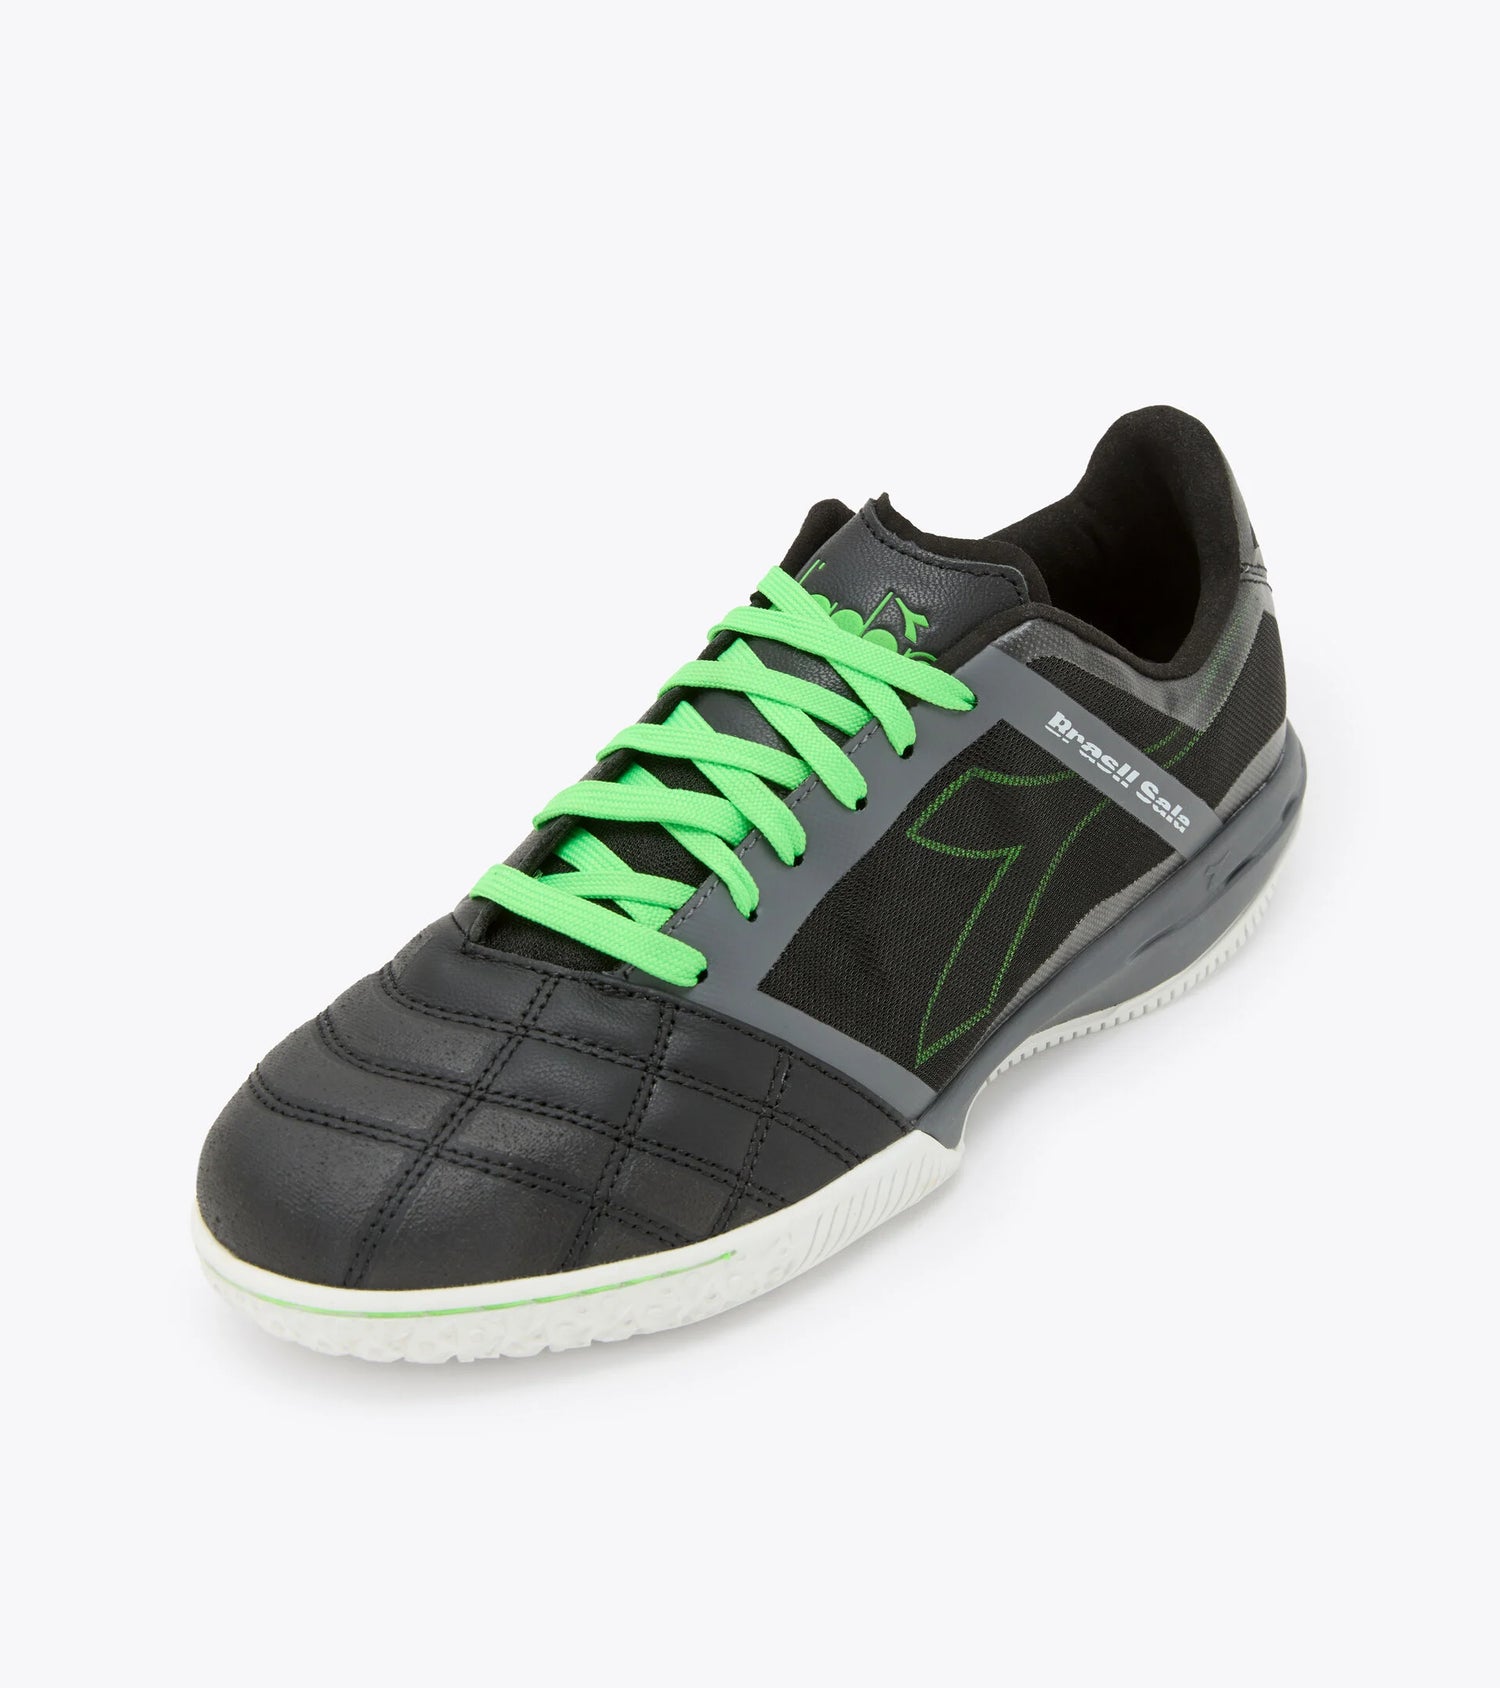 Diadora Brazil Sala ID Indoor Soccer Shoe - Black/Green Fluo